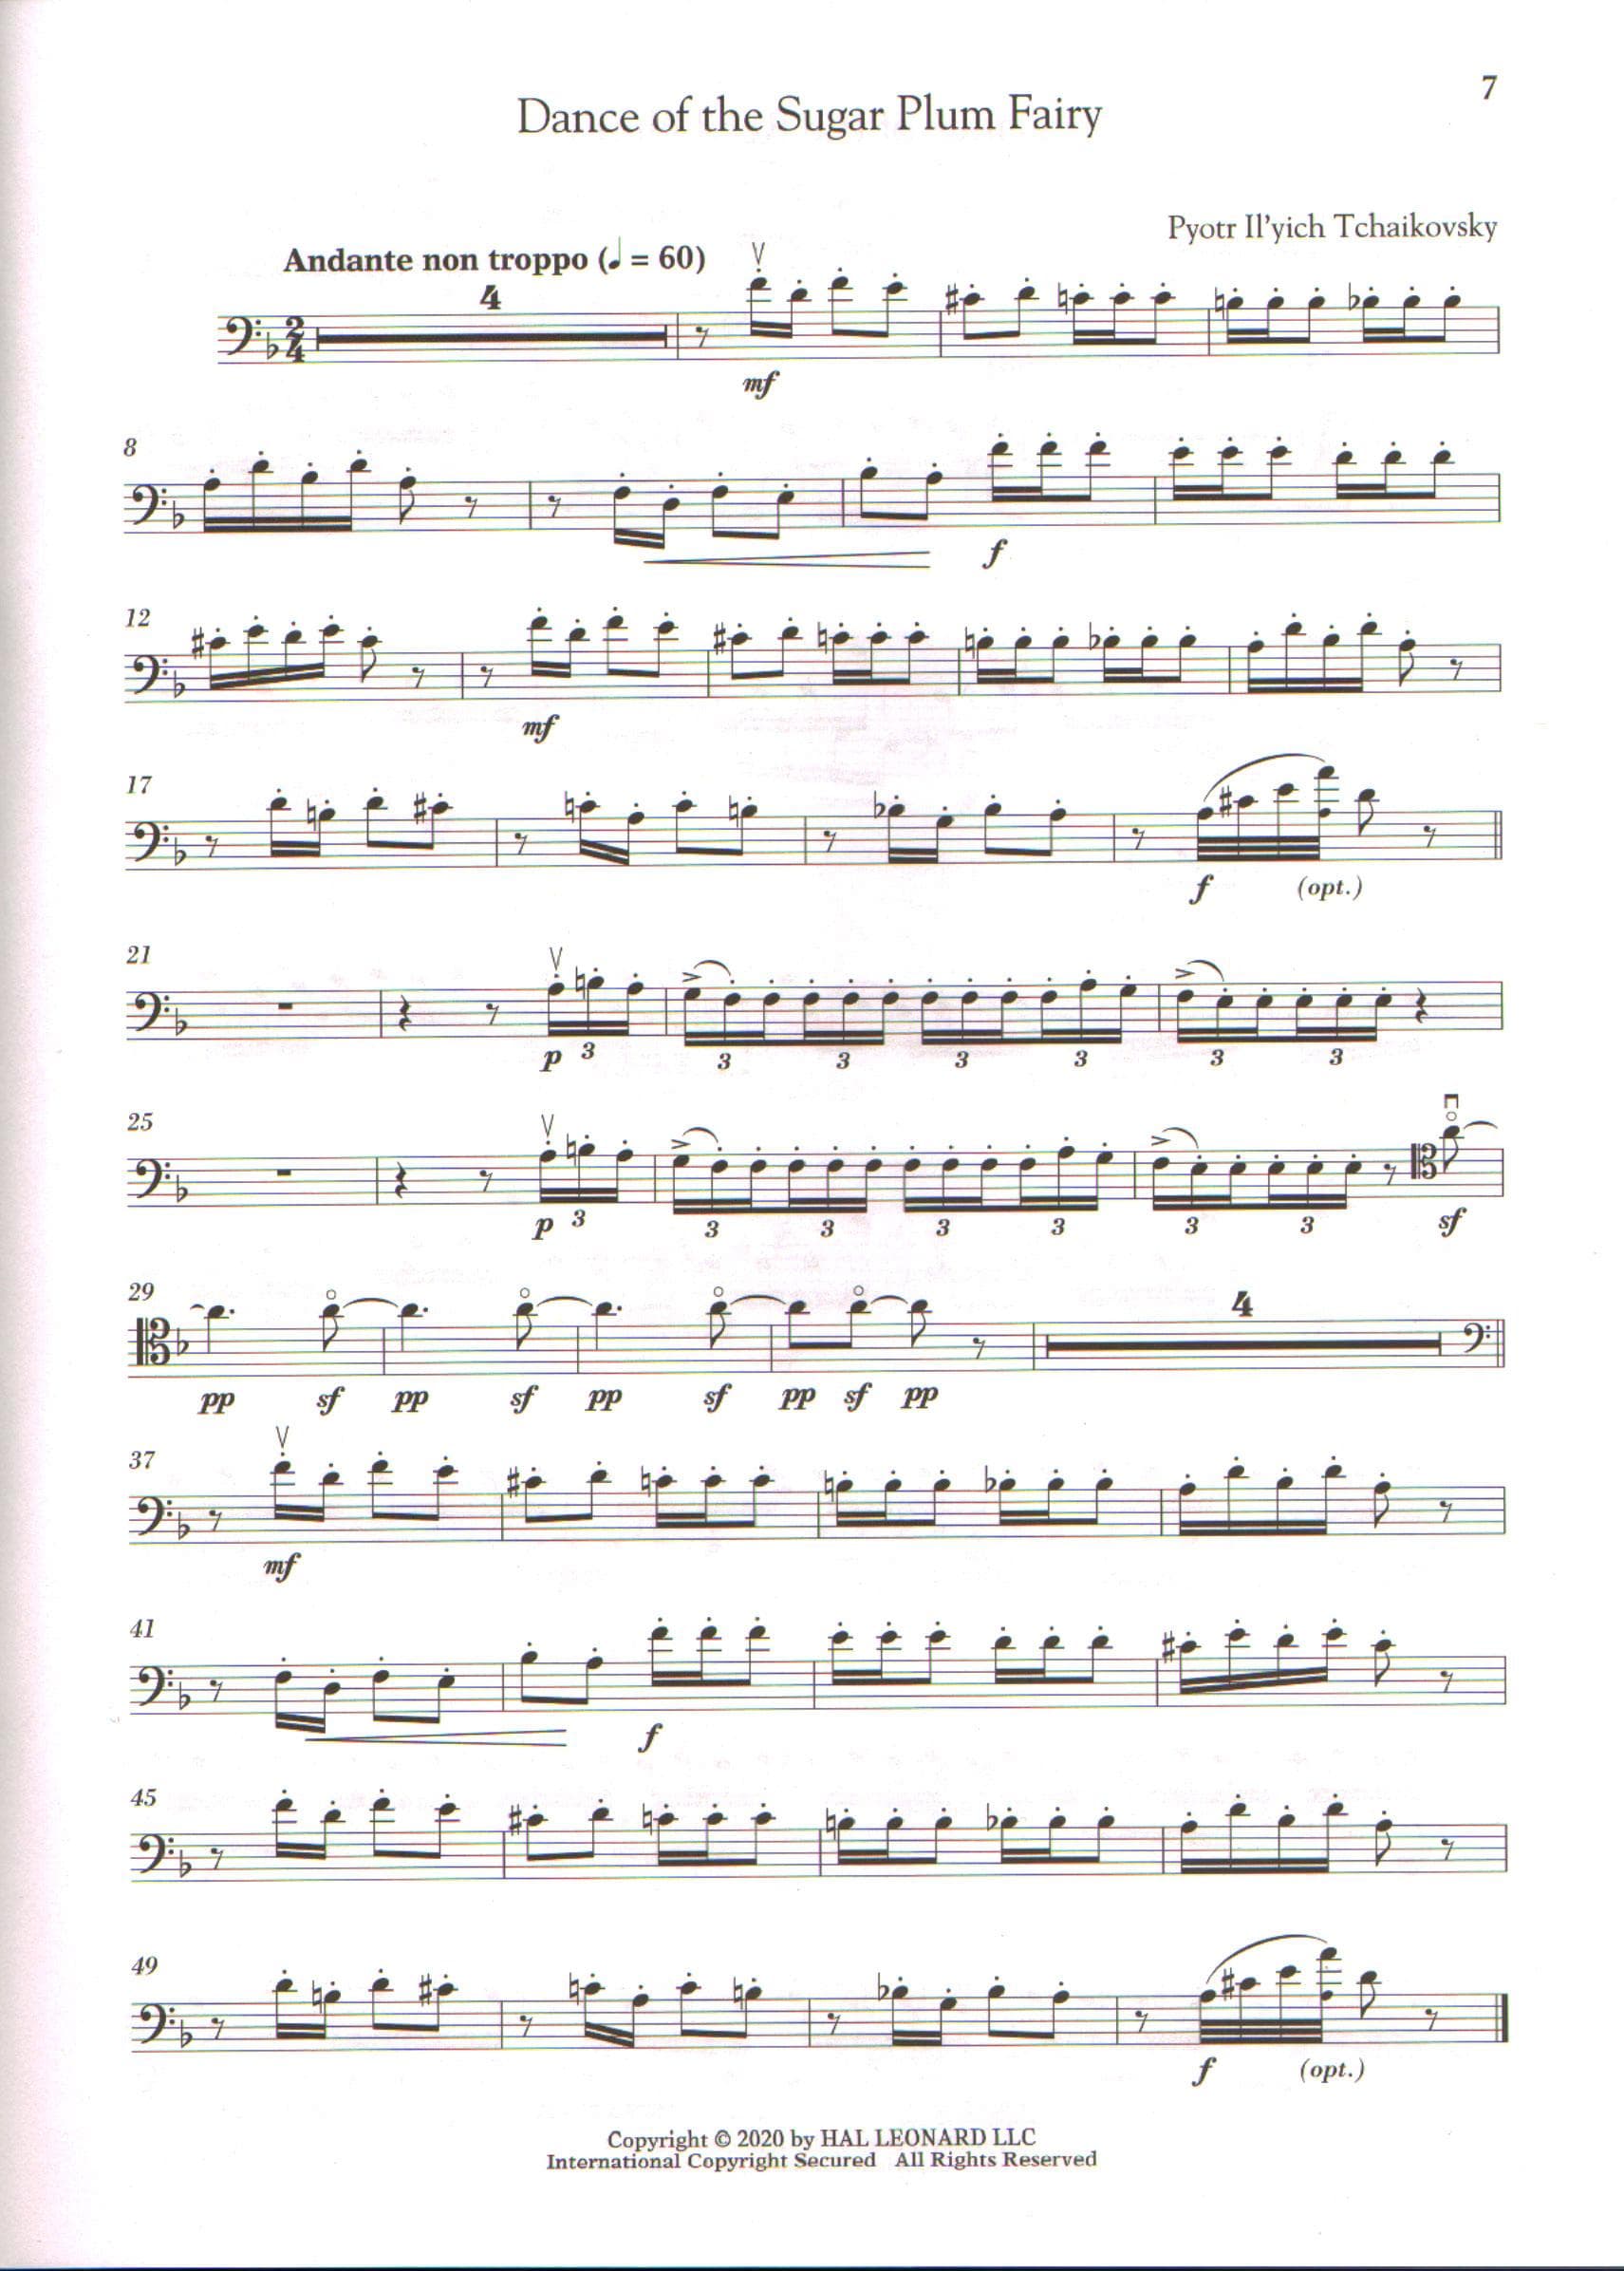 The Nutcracker for Classical Players Cello-Piano